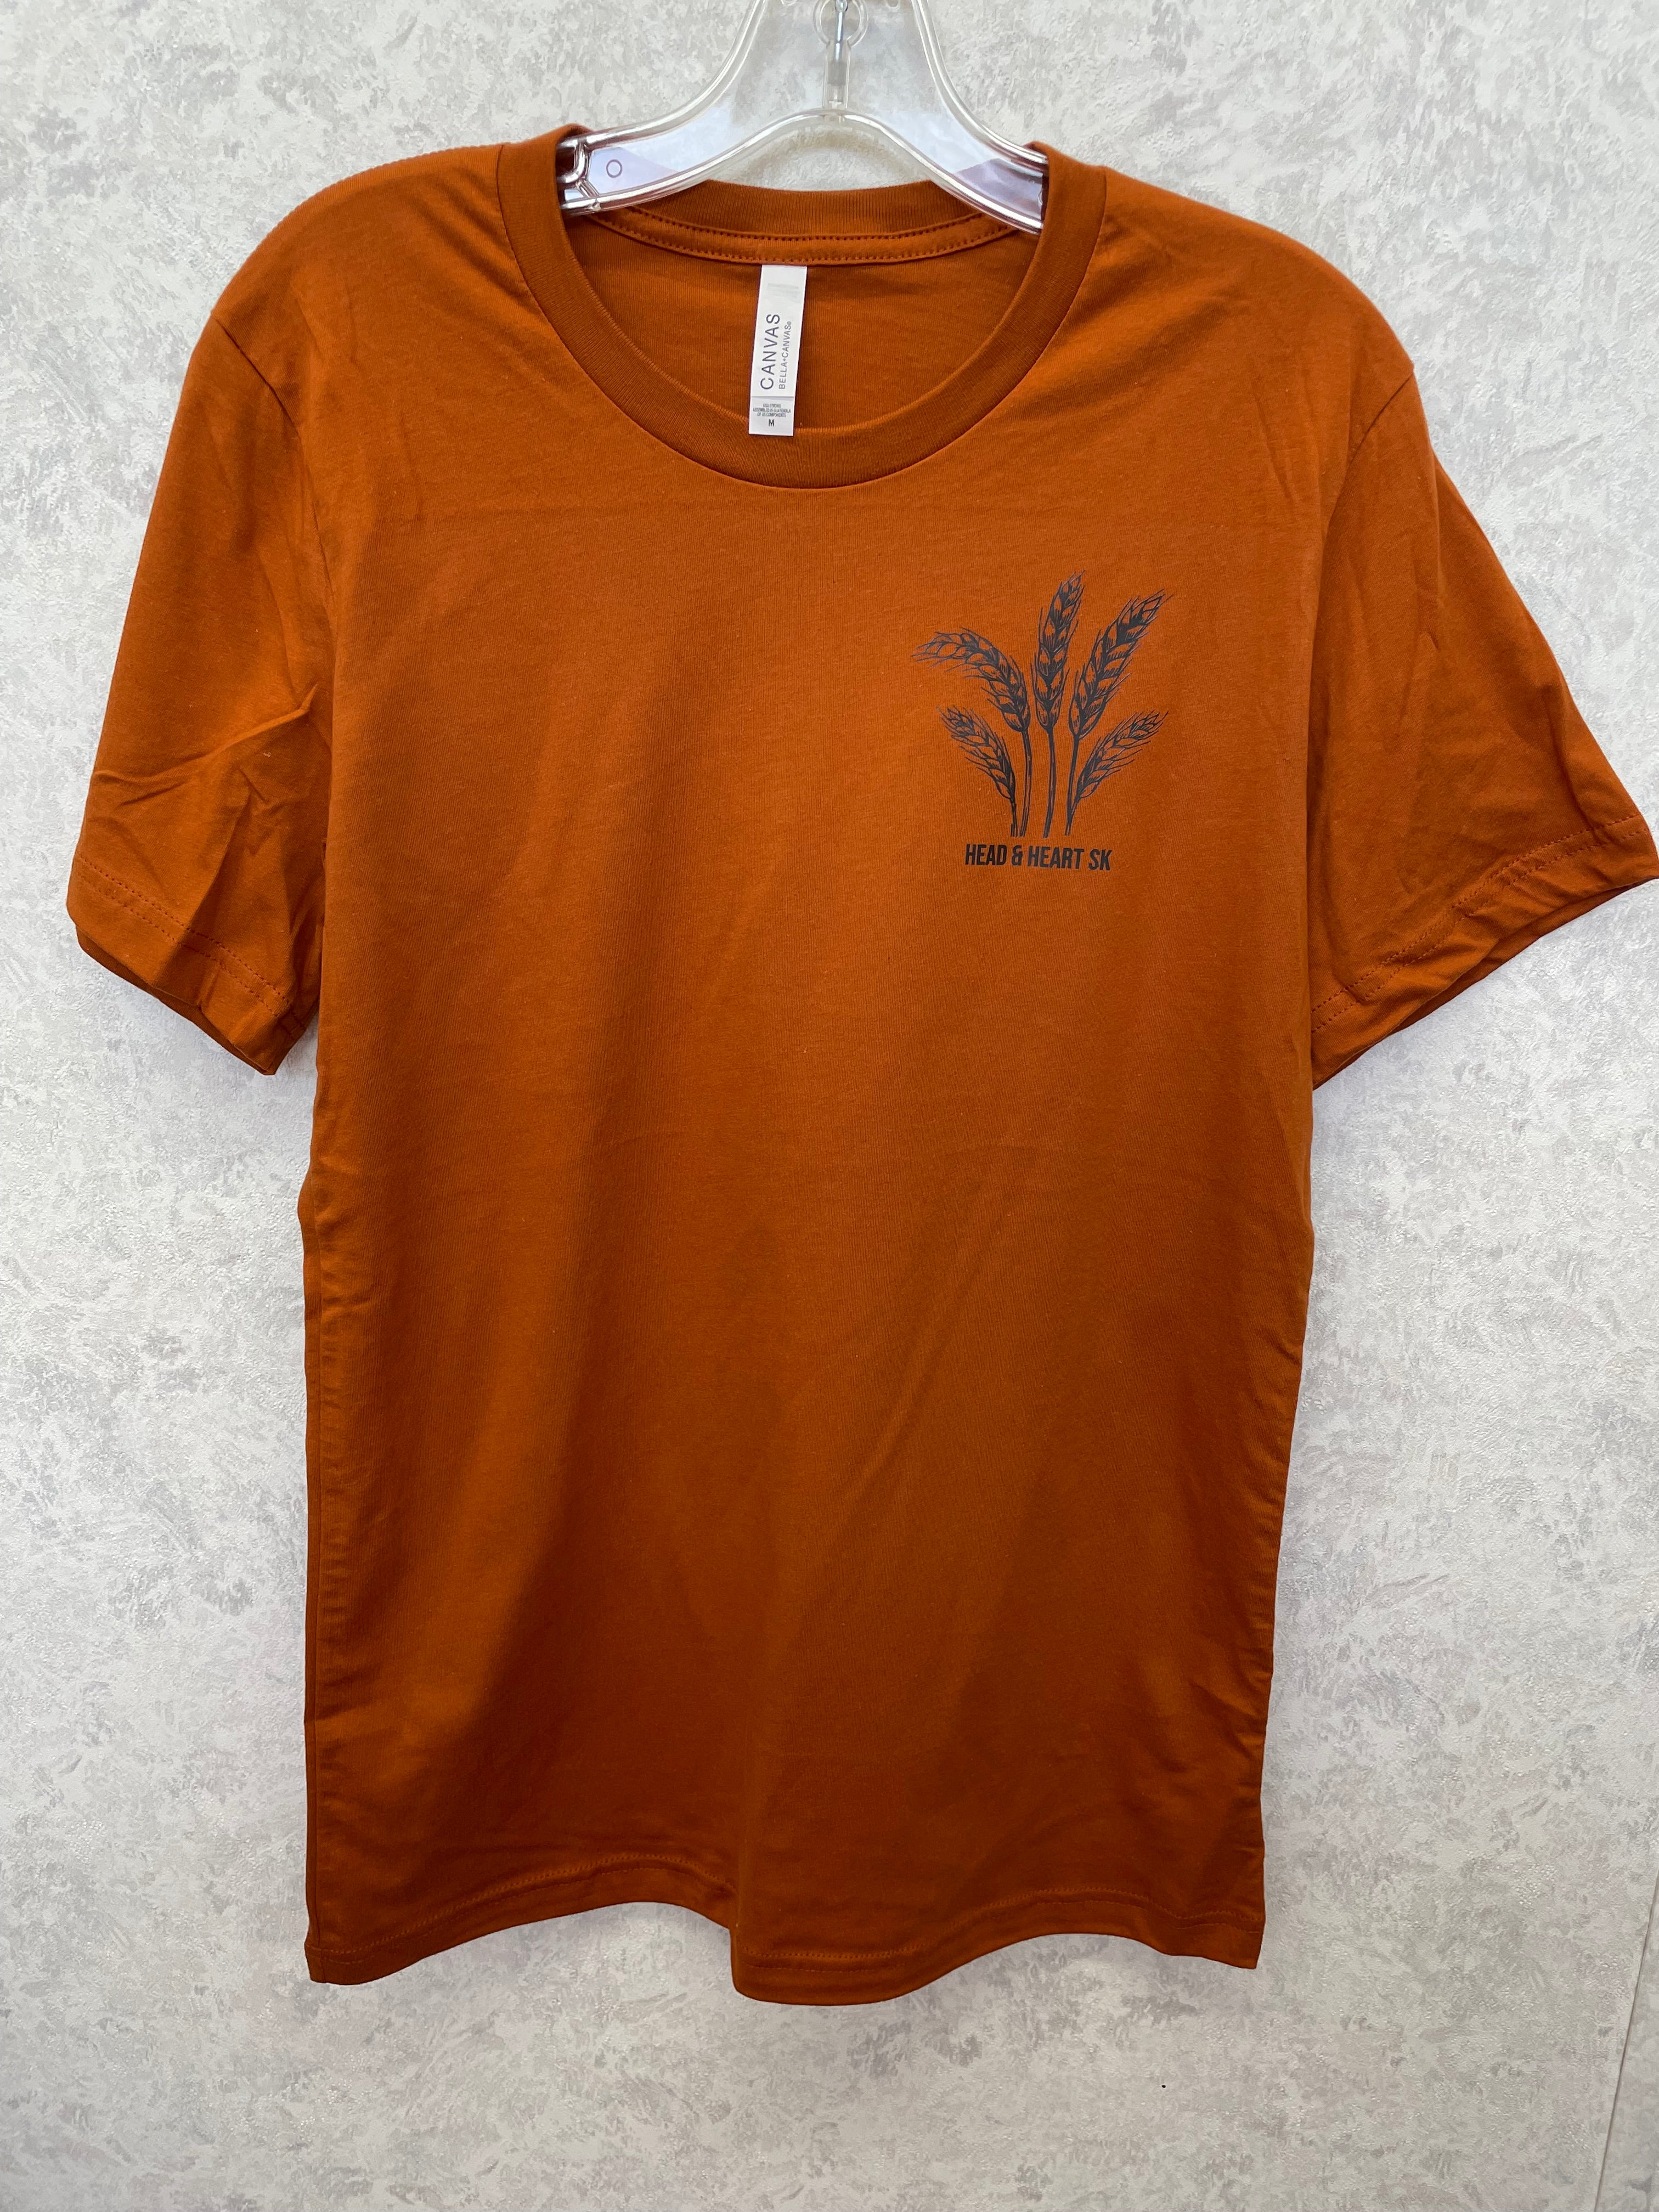 Wheat Harvest T-Shirt